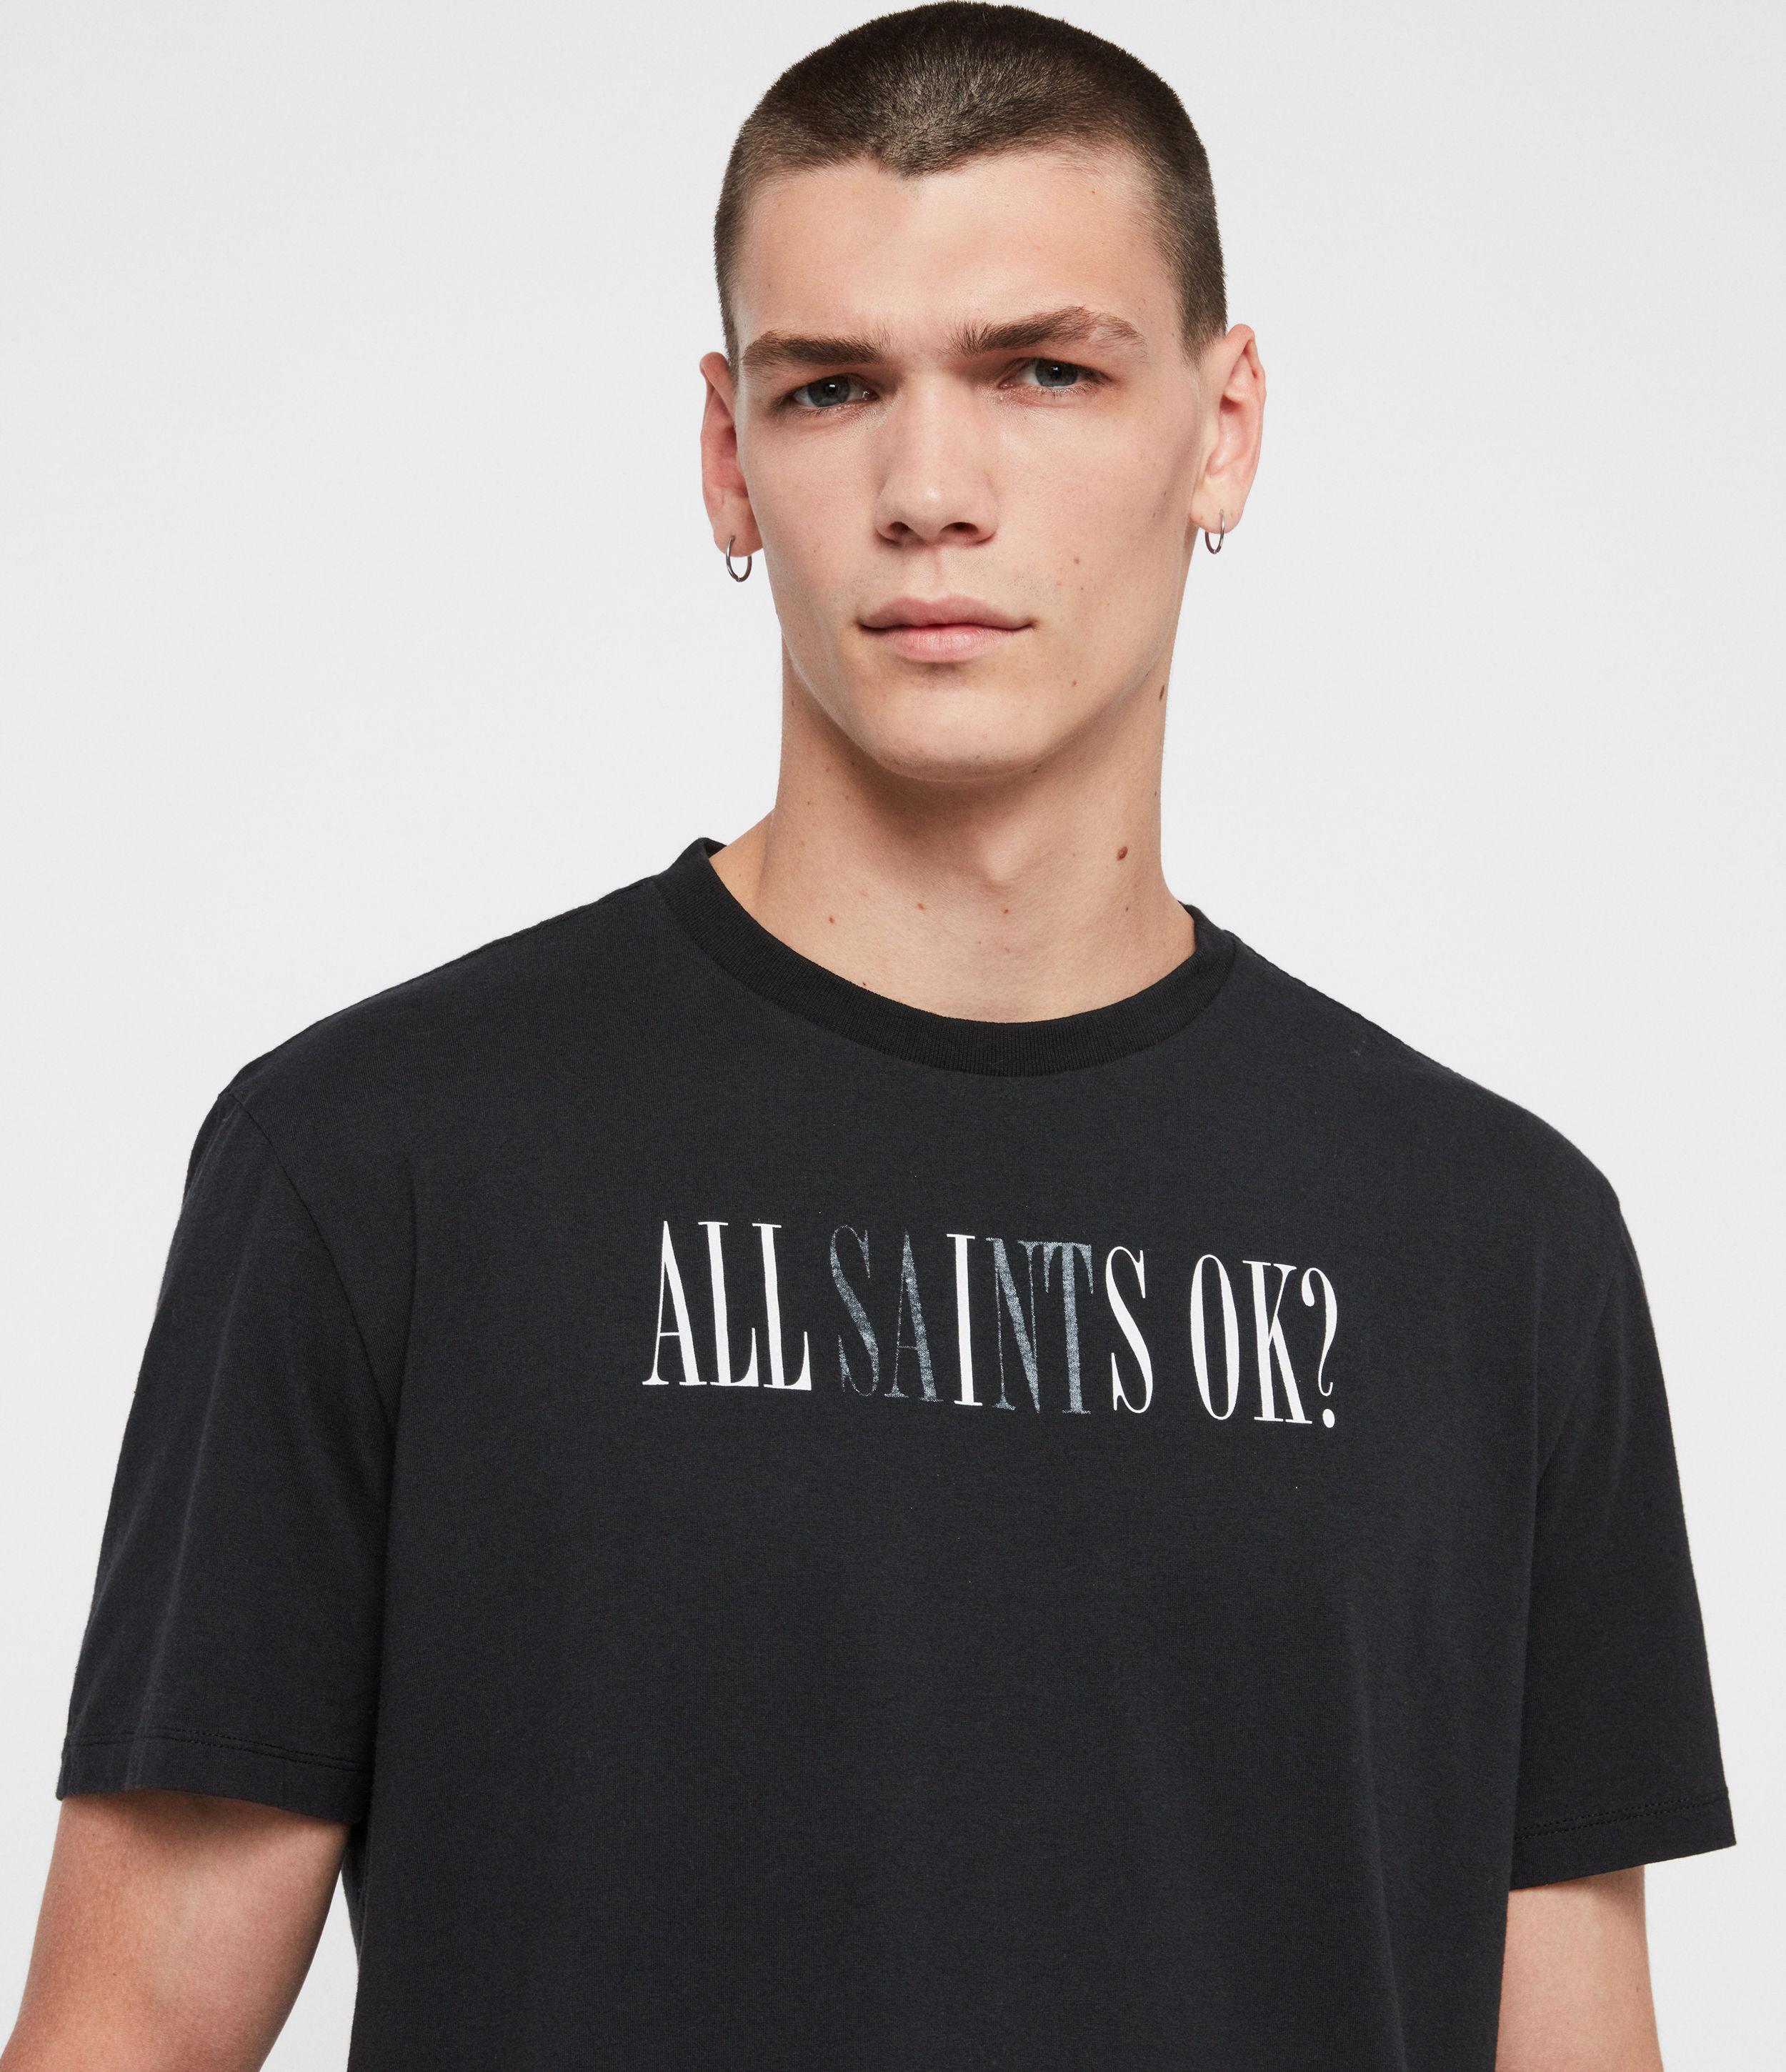 AllSaints Cotton Okay Crew T-shirt in Black for Men - Lyst